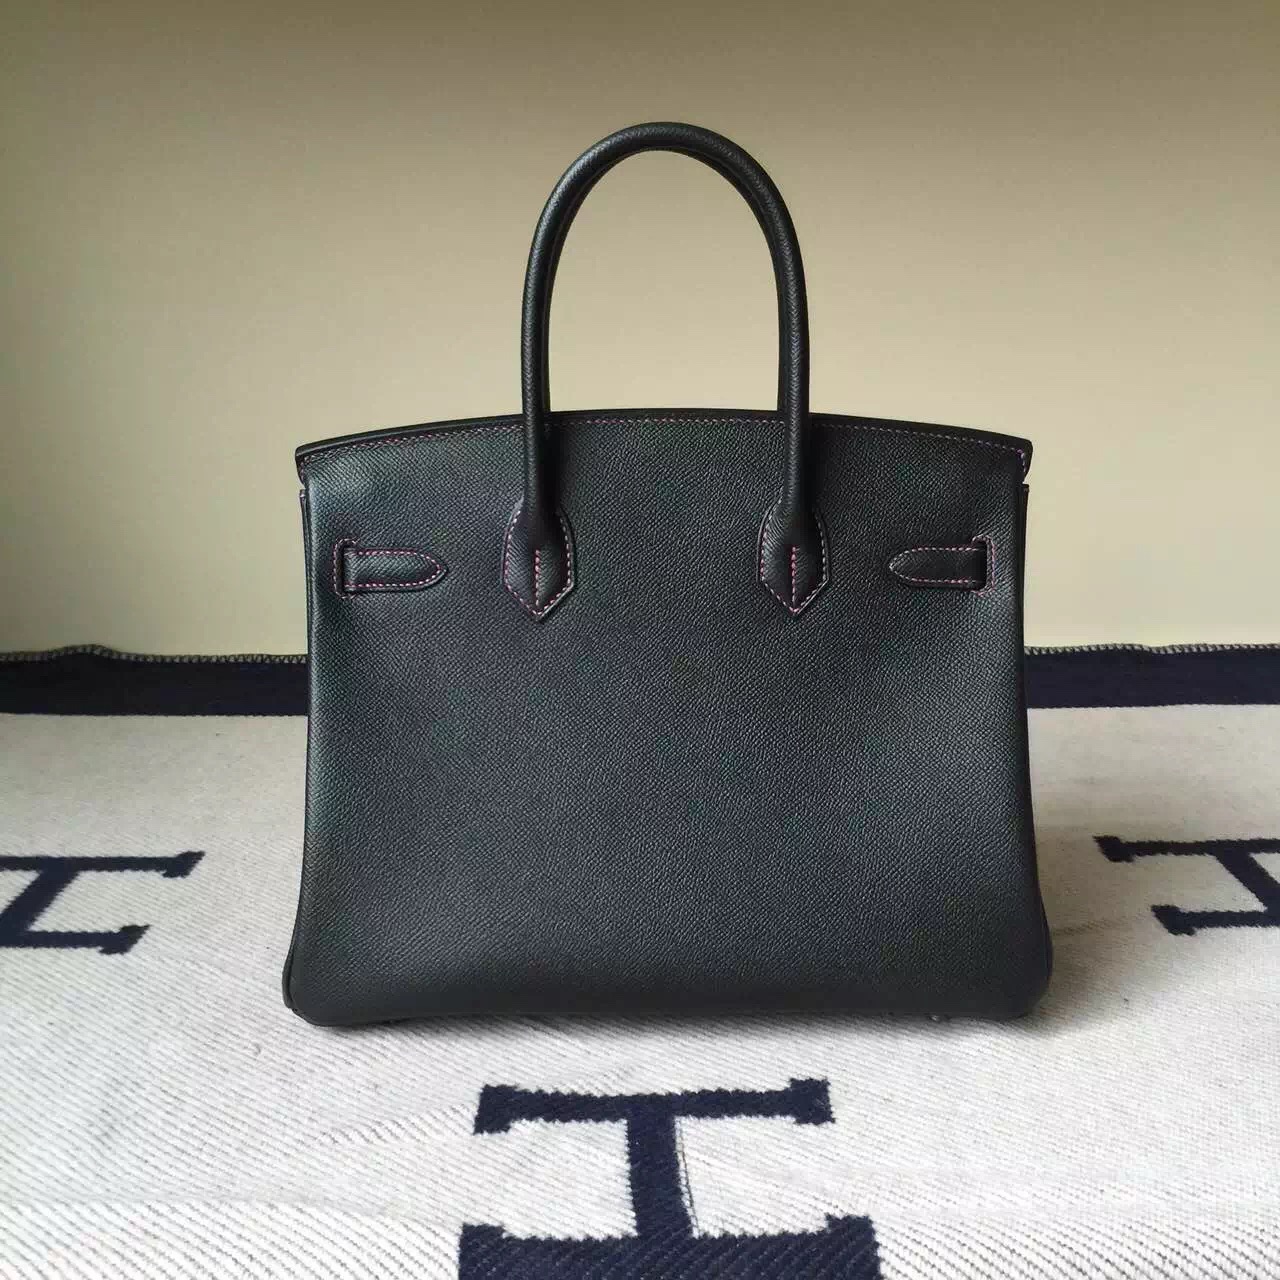 Discount Hermes Birkin30cm Bag CK89 Black/P9 Purple inner Epsom Calfskin Leather